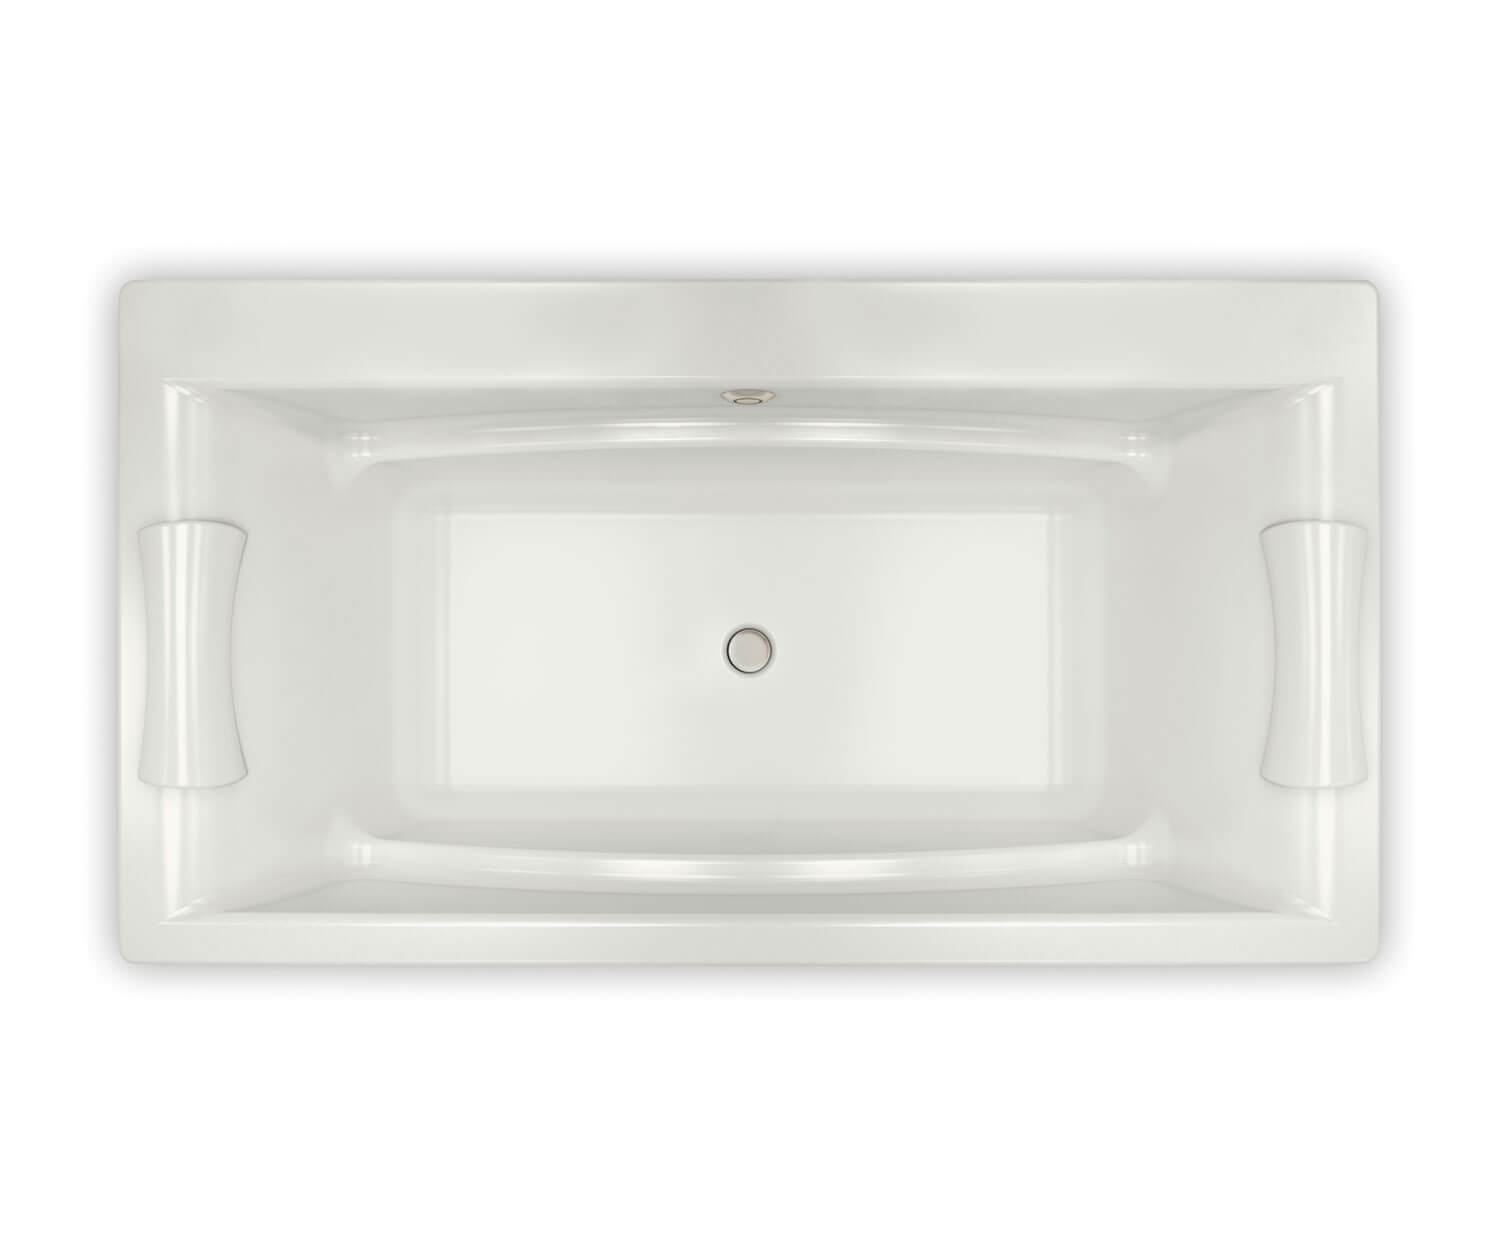 Optik C 66 x 36 Acrylic Drop-in Center Drain Bathtub in White 